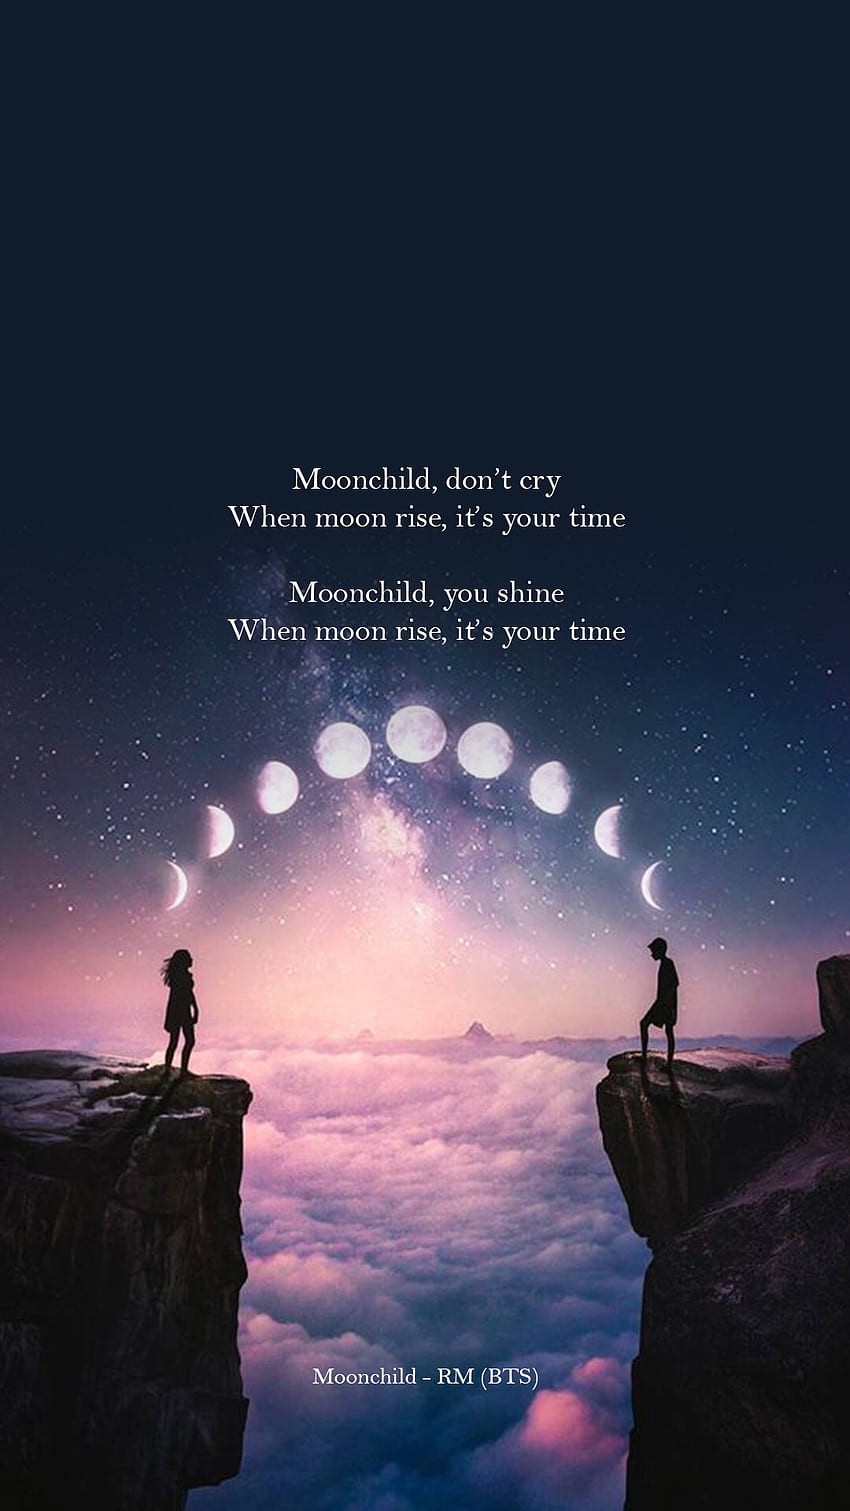 BTS Lyrics ⁷ - When moon rise it's your time Moonchild - RM por doolsetbangtan fondo de pantalla del teléfono